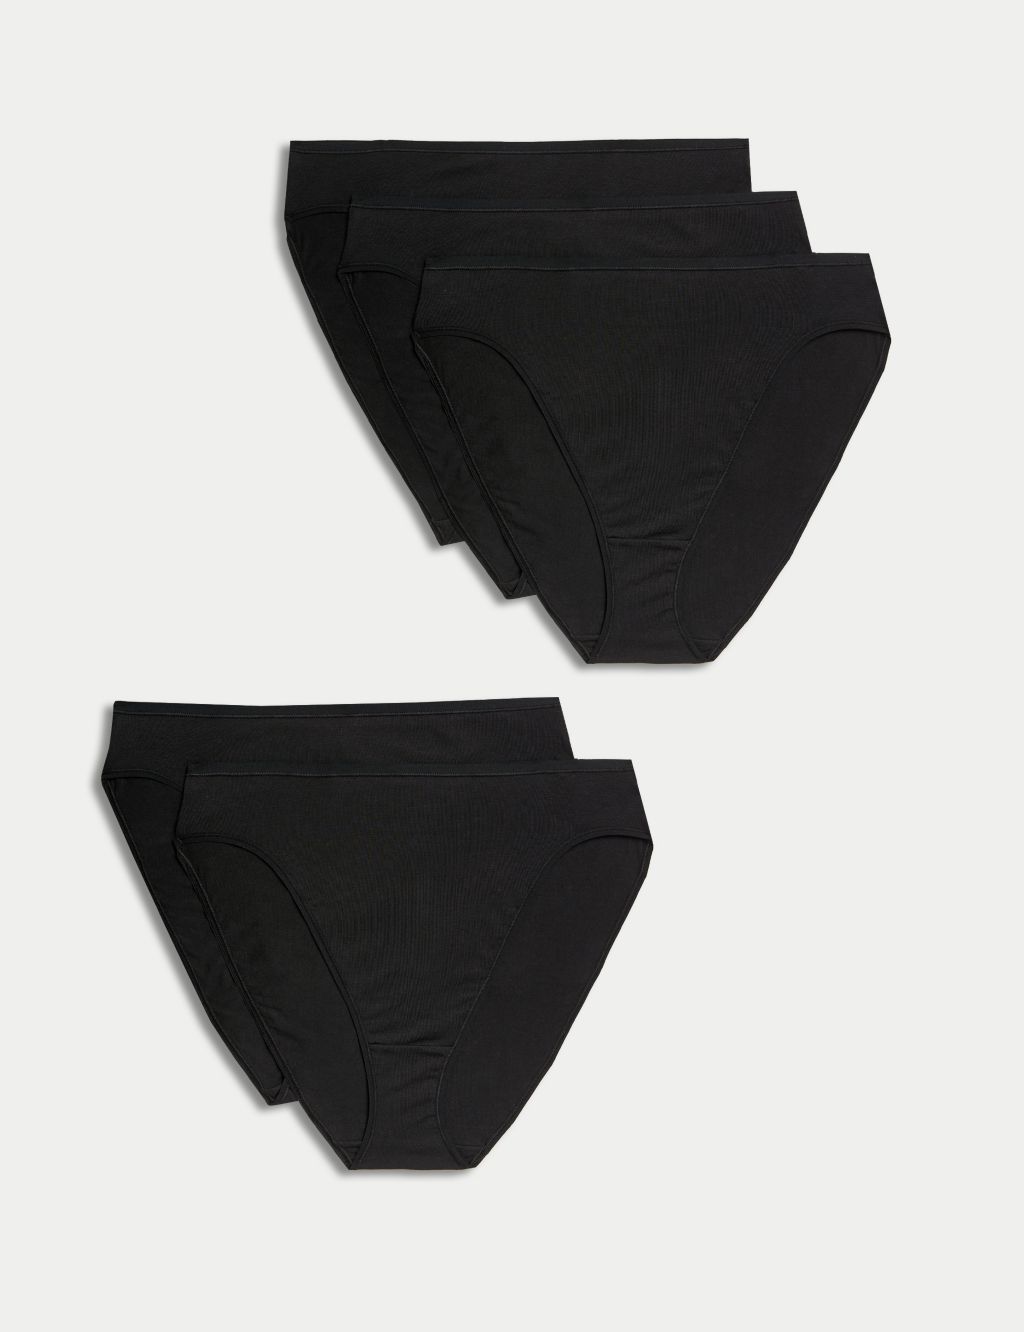 Reebok Women's Underwear – 6 Pack Plus Size Seamless Hipster Briefs  (XL-3XL), Size X-Large, Black/Cream/Green at  Women's Clothing store